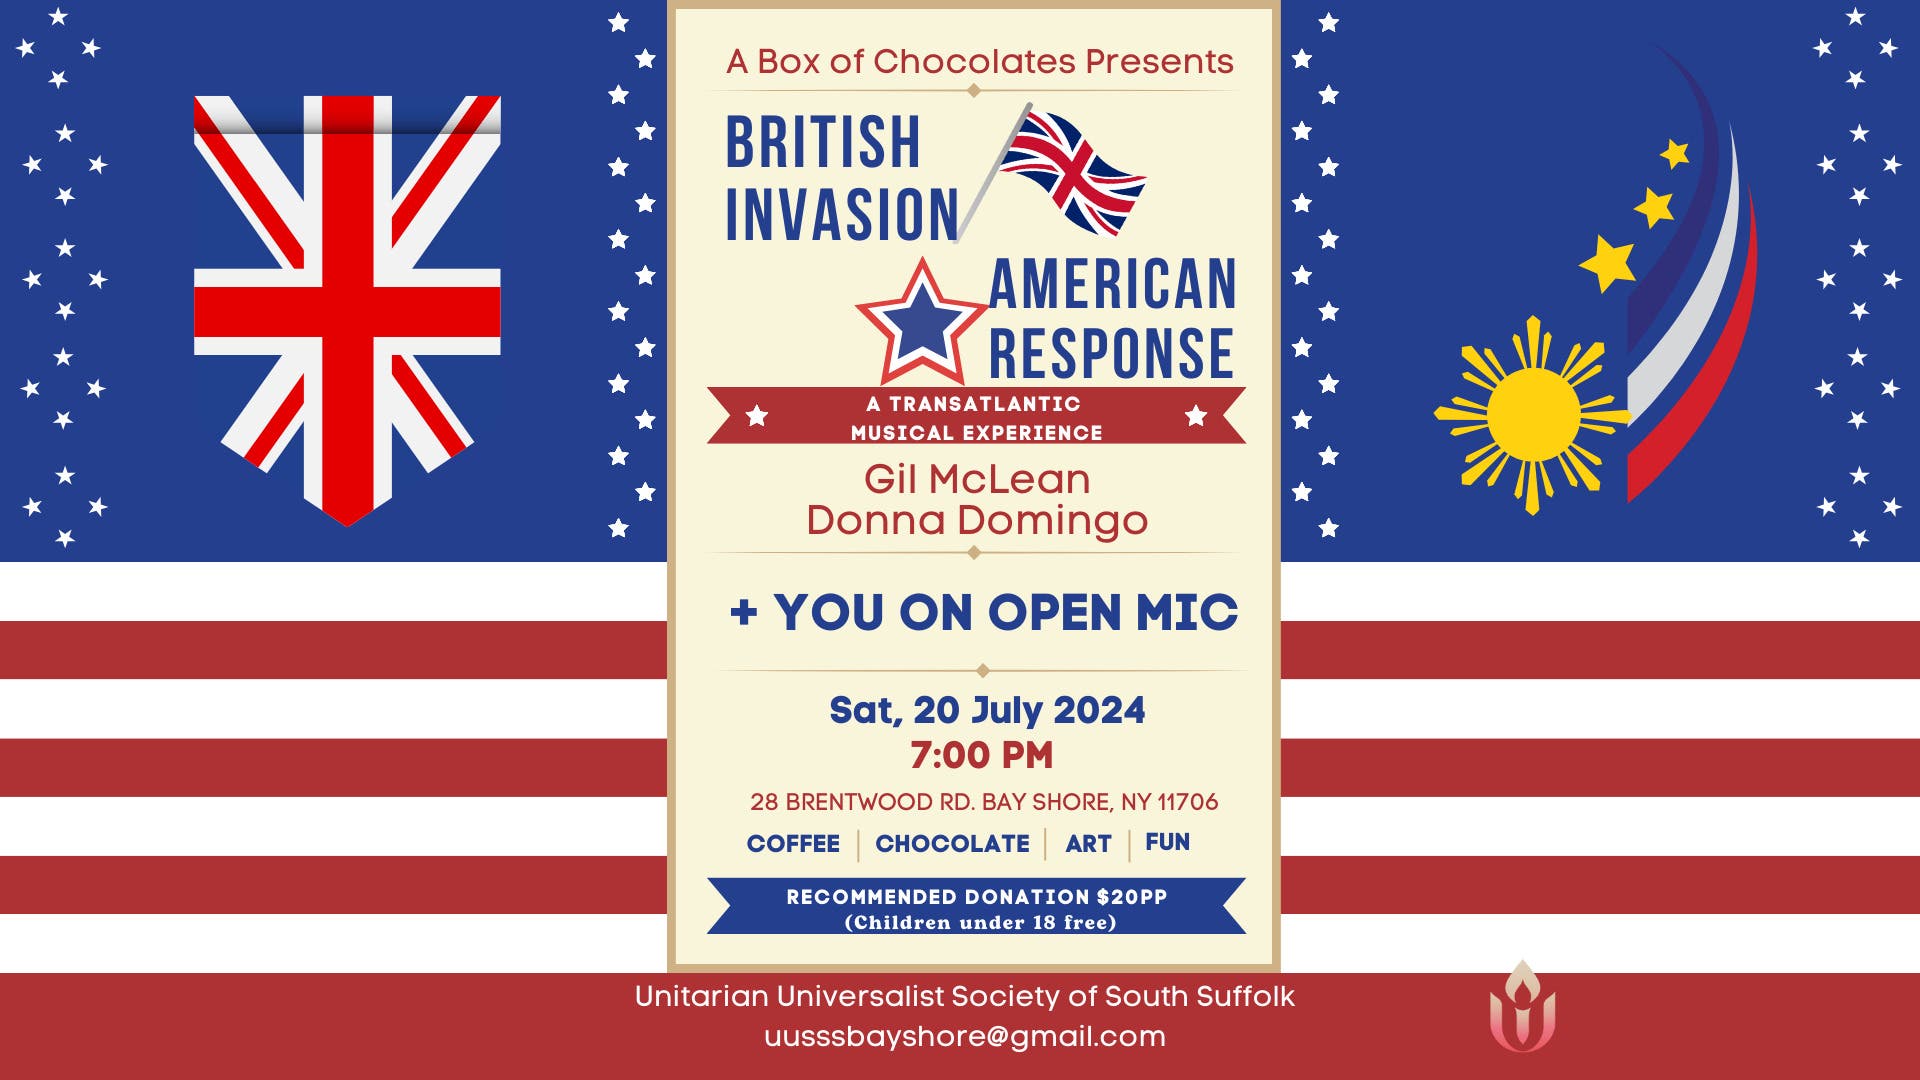 A Box of Chocolates "British Invasion - American Response" Musical Night + Open Mic 